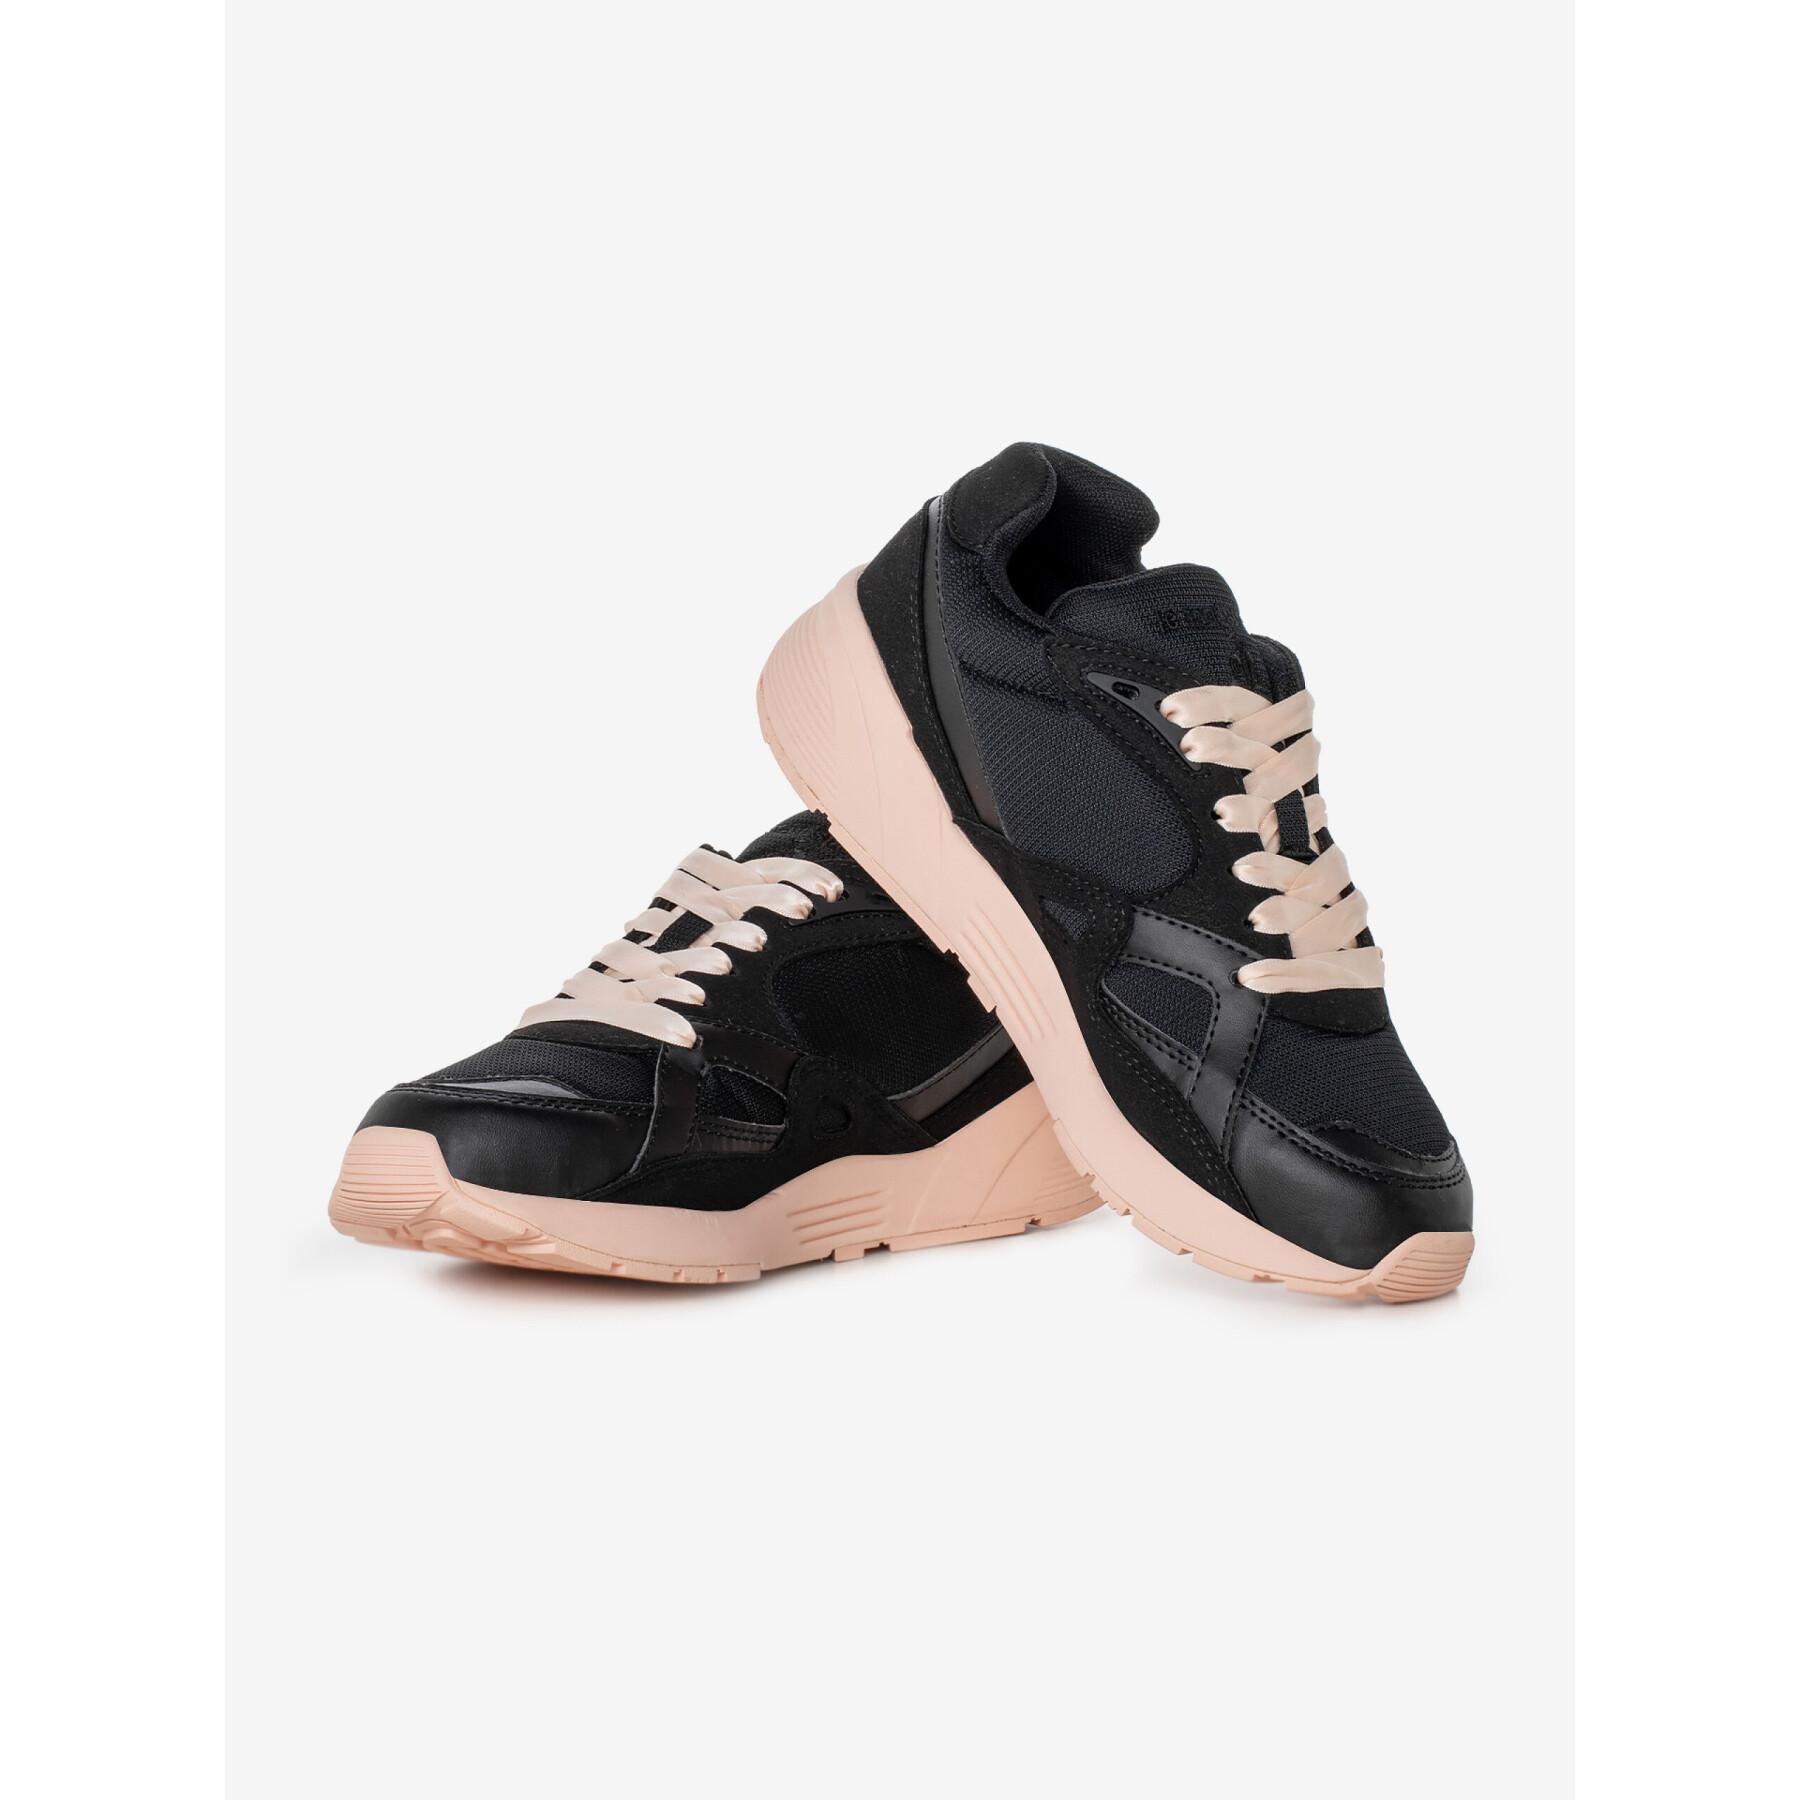 Sneakers für Frauen Le Coq Sportif R850 Street Satin